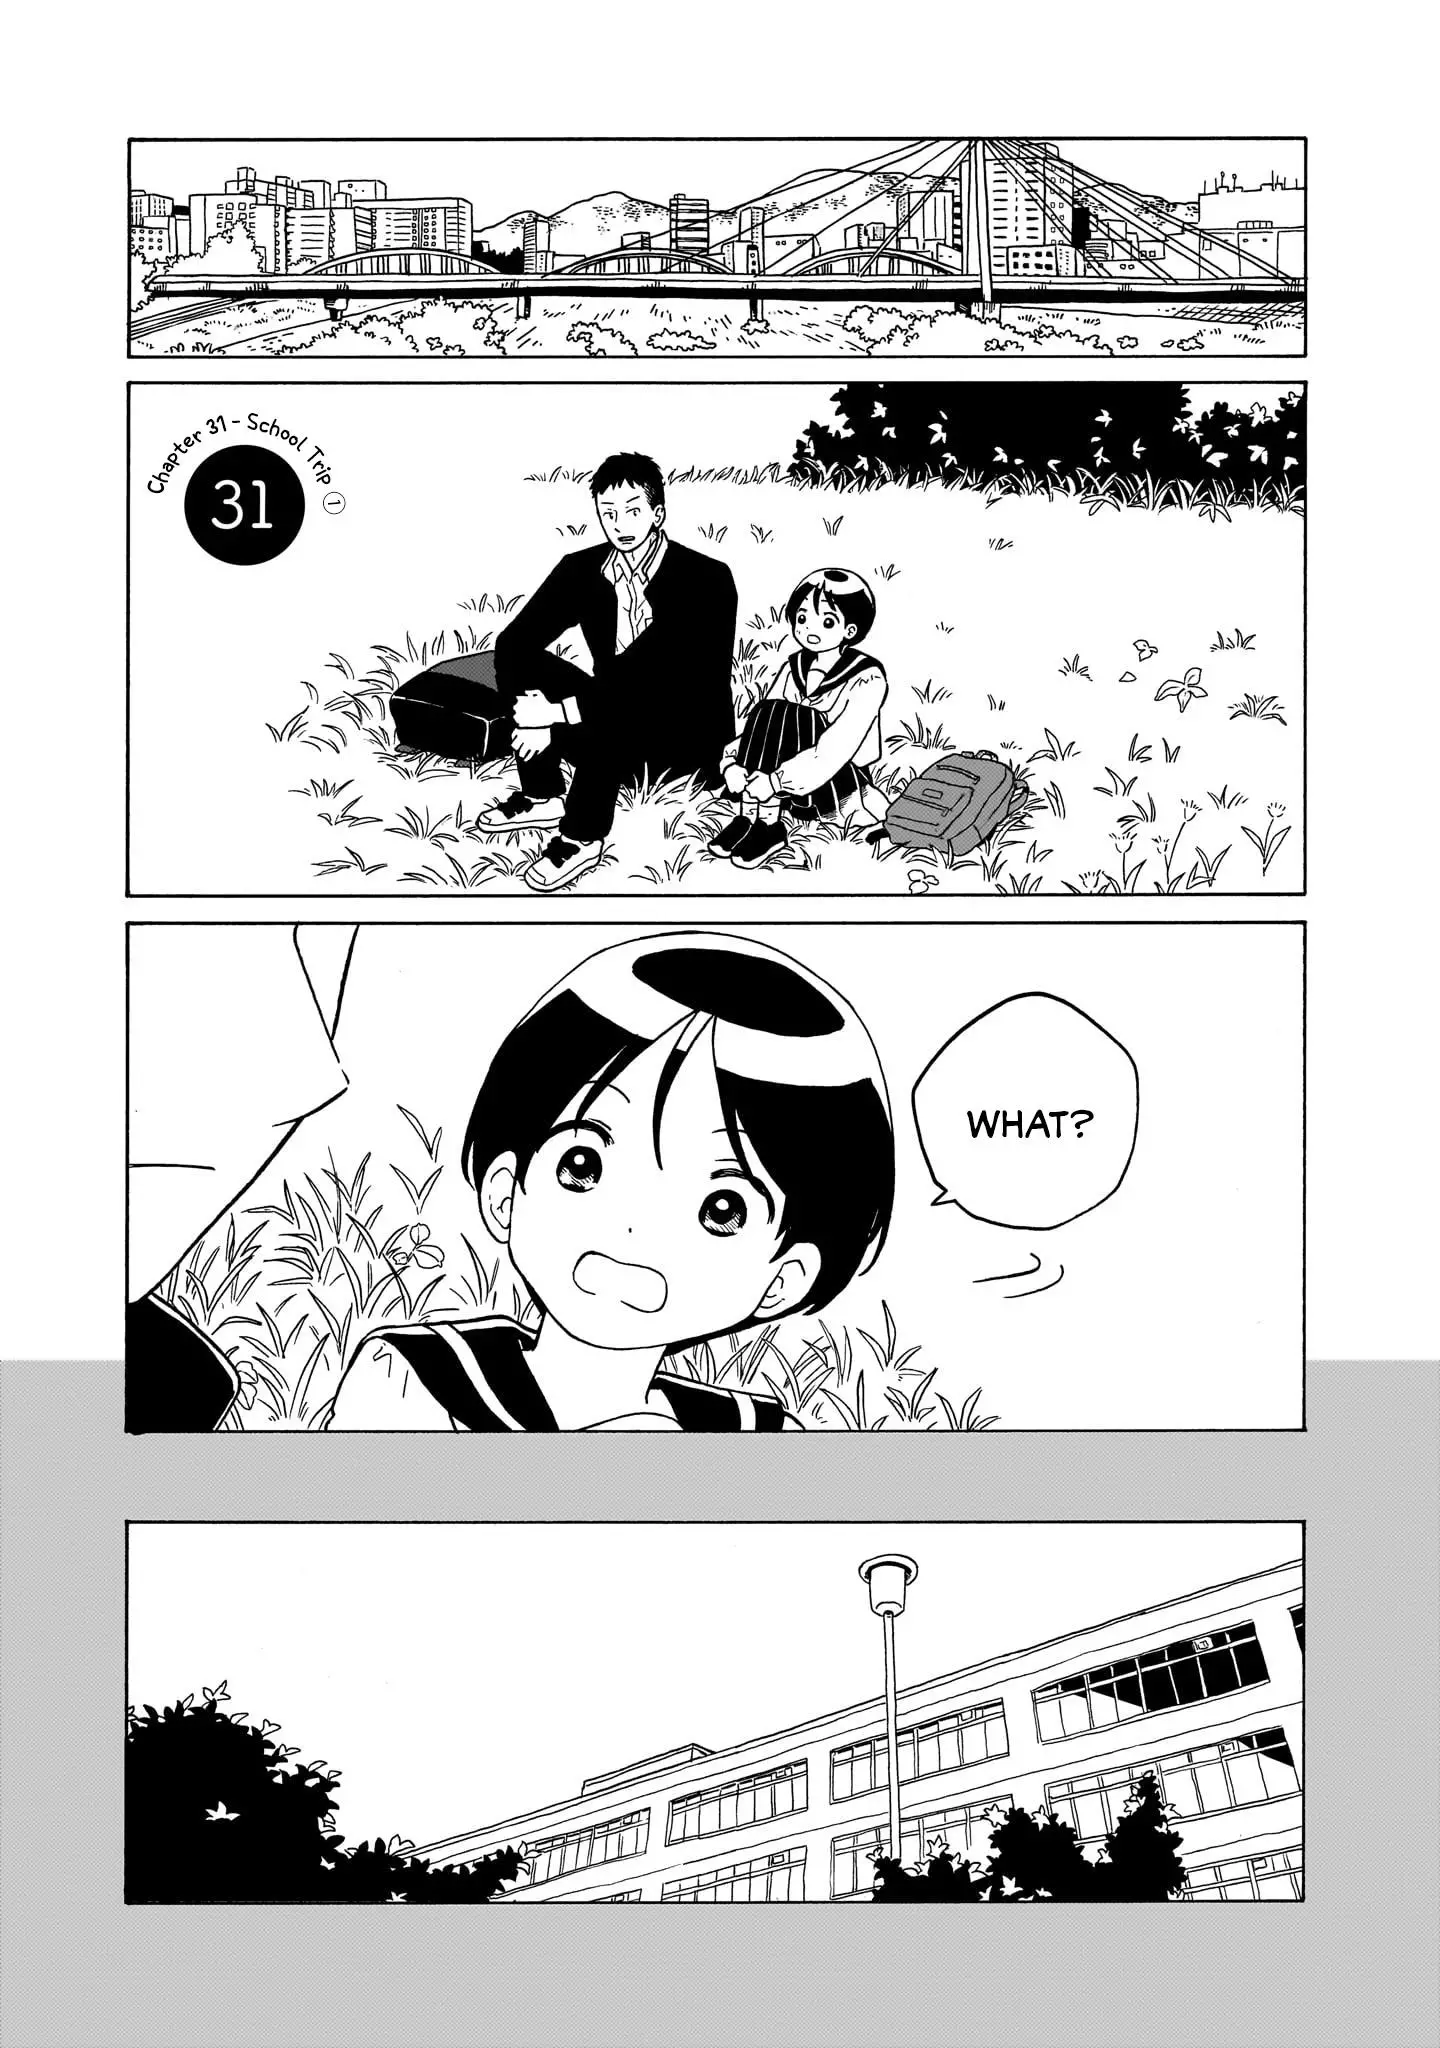 Korogaru Kyoudai - 31 page 1-9fcb5fe4